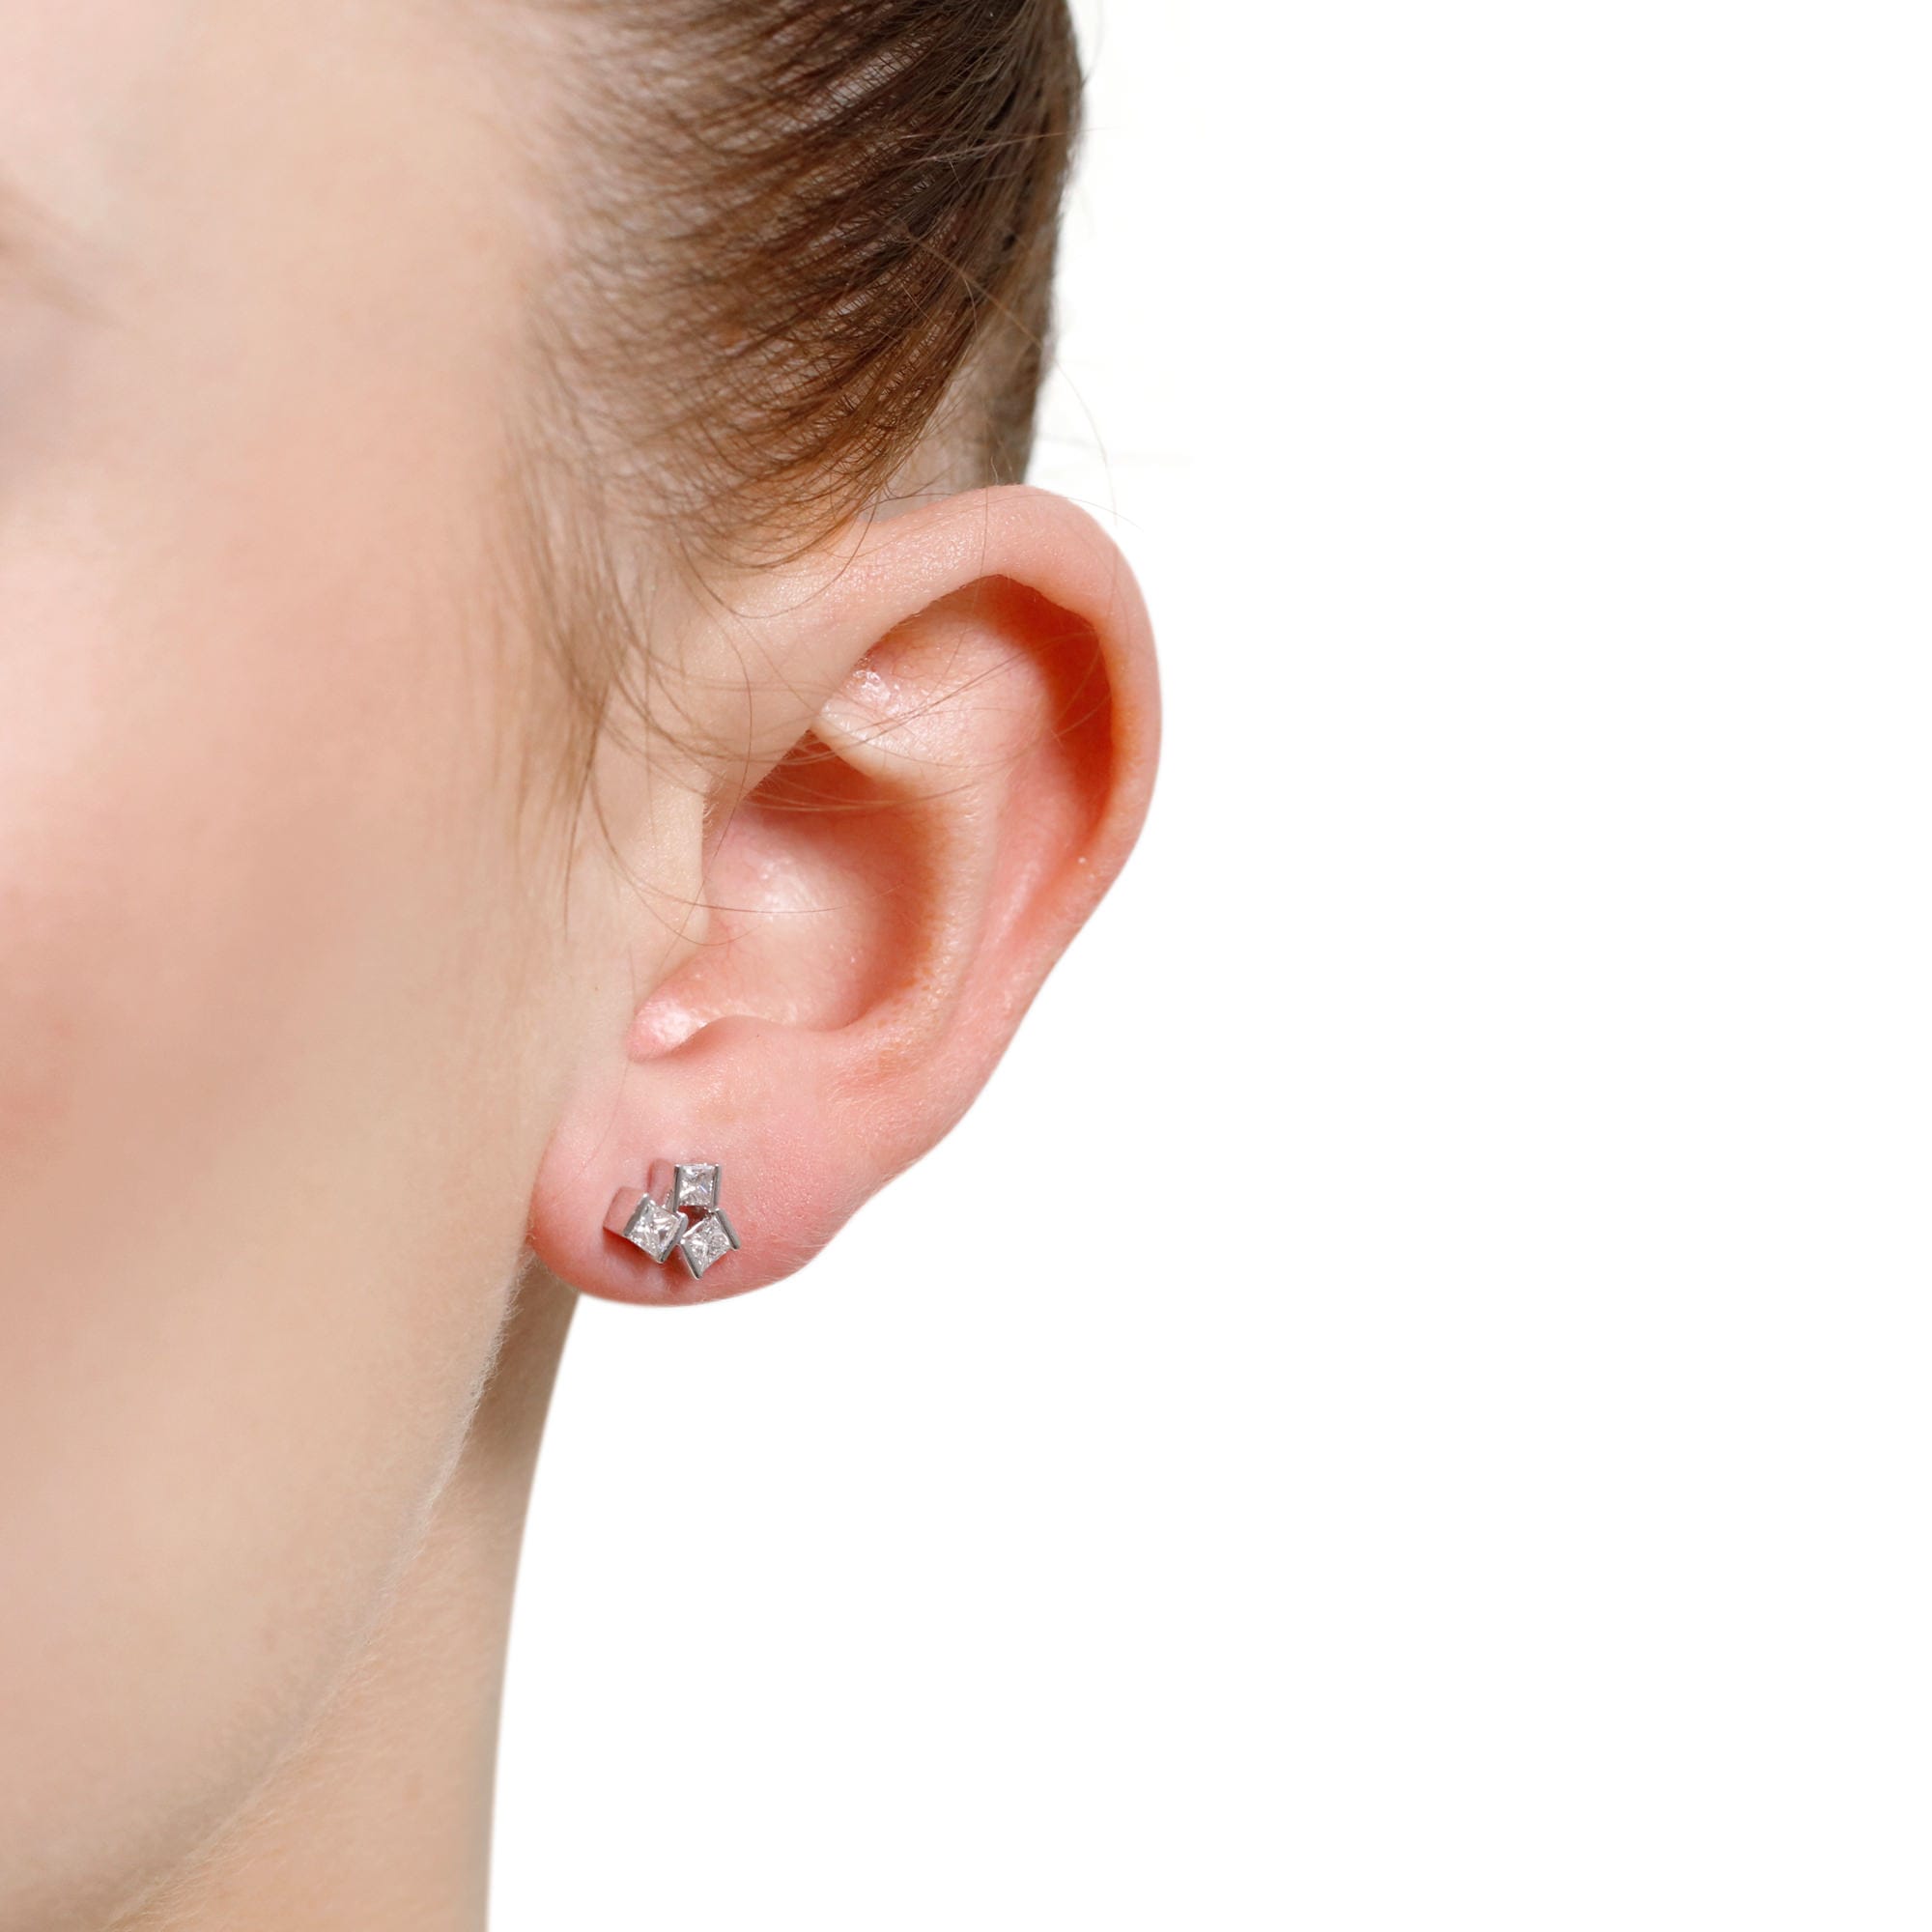 Hopscotch White Gold Small Diamond Stud Earrings